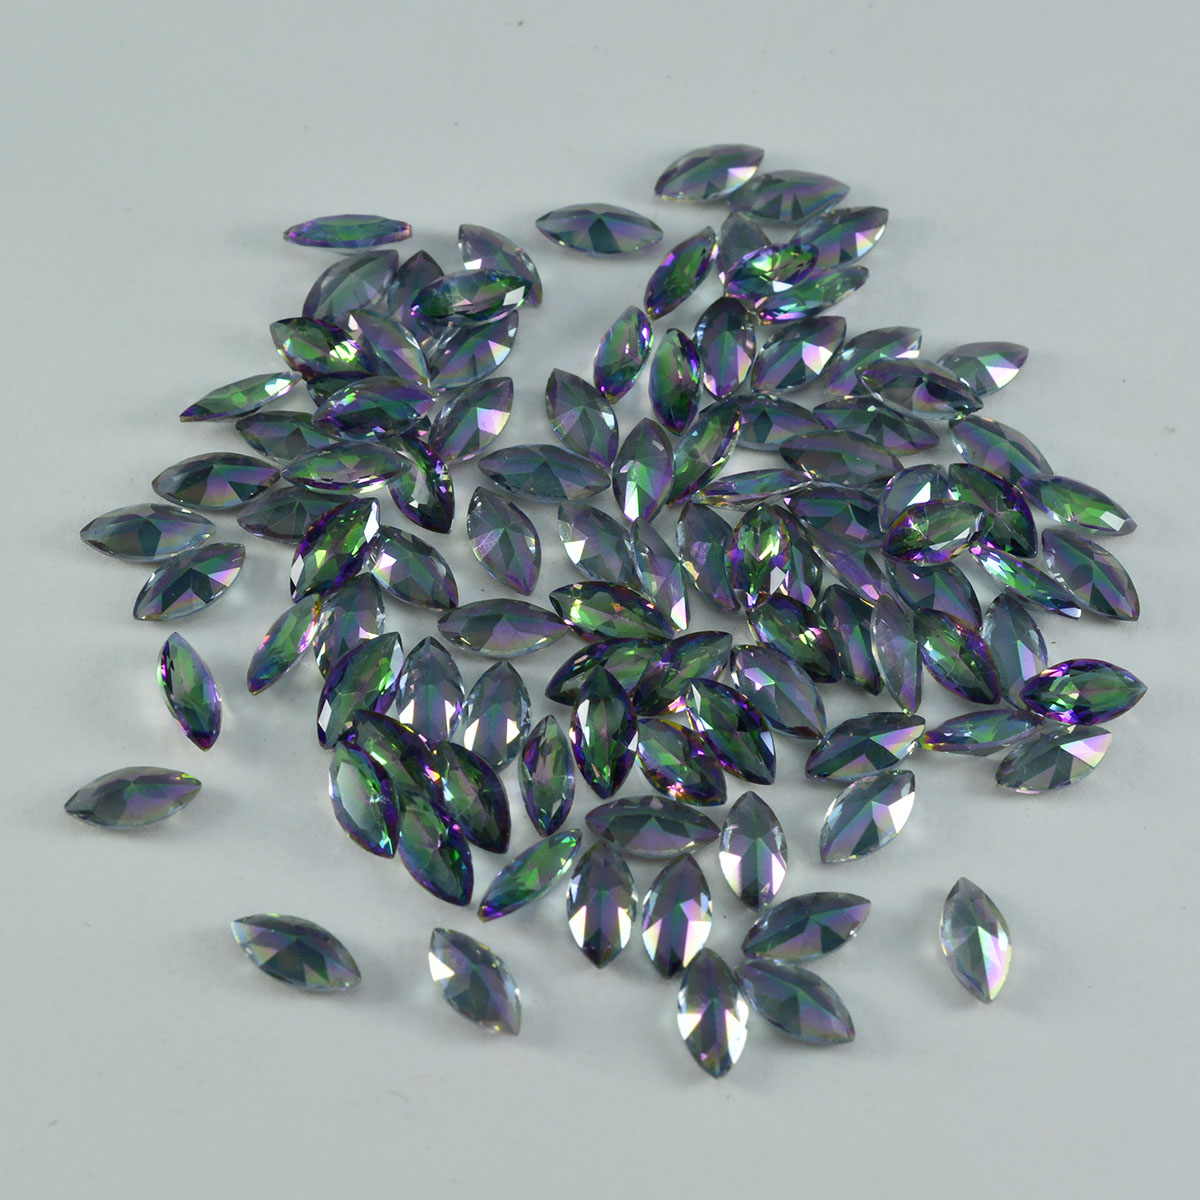 Riyogems 1PC Multi Color Mystic Quartz Faceted 3x6 mm Marquise Shape superb Quality Gemstone